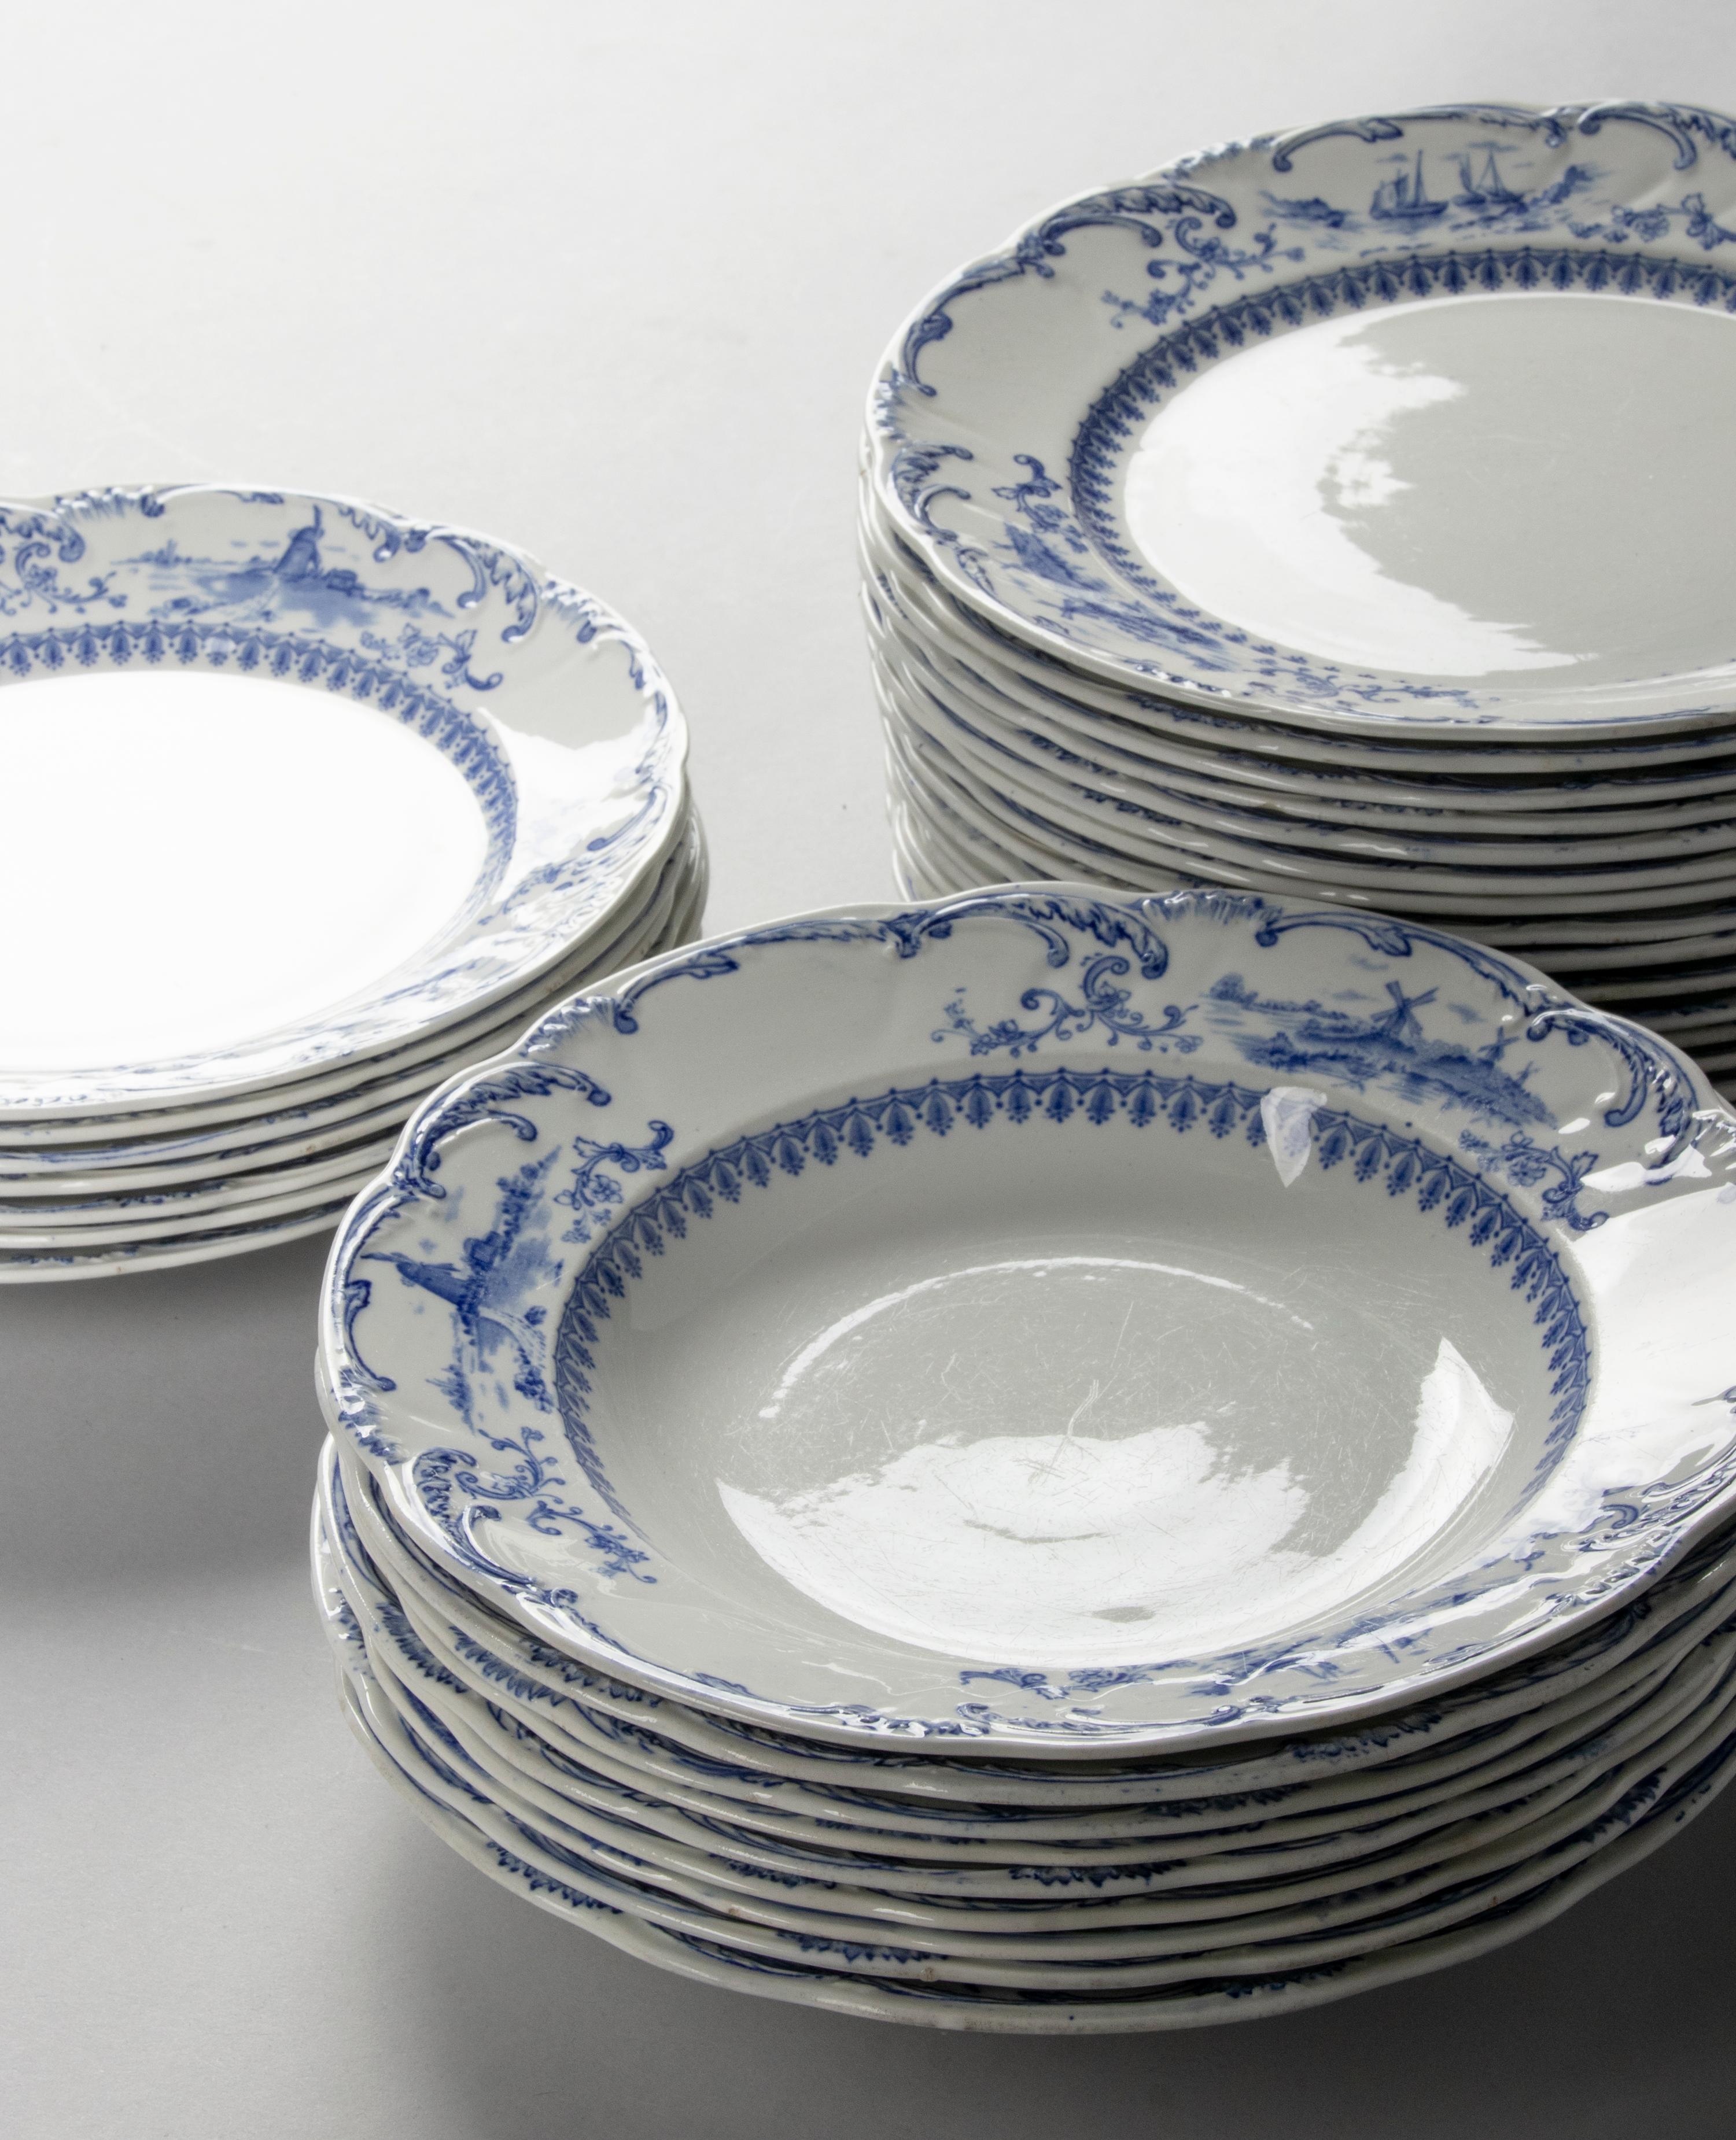 Glazed 44-Piece Antique Dinner Service by Ridgways England in Delft Pattern